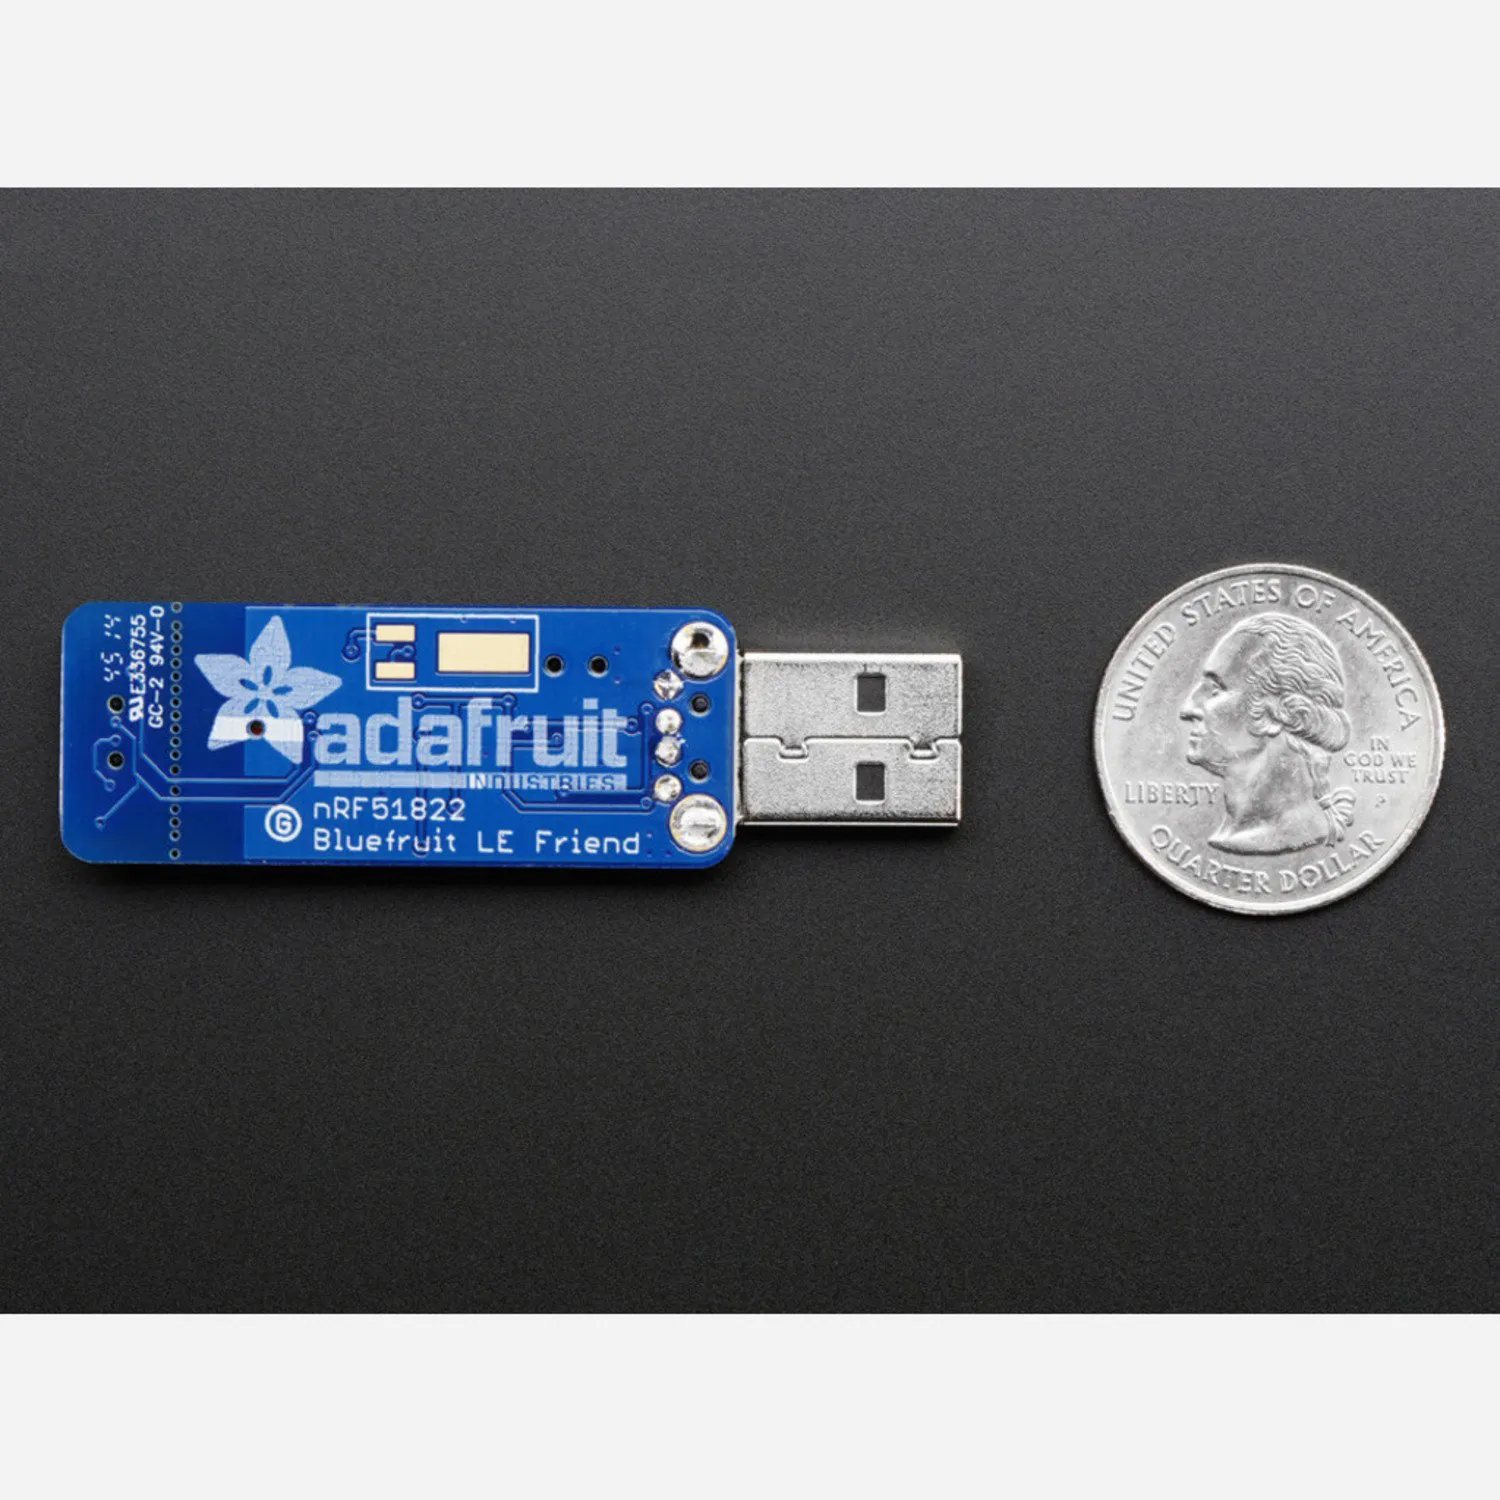 Photo of Bluefruit LE Sniffer - Bluetooth Low Energy (BLE 4.0) - nRF51822 [v3.0]